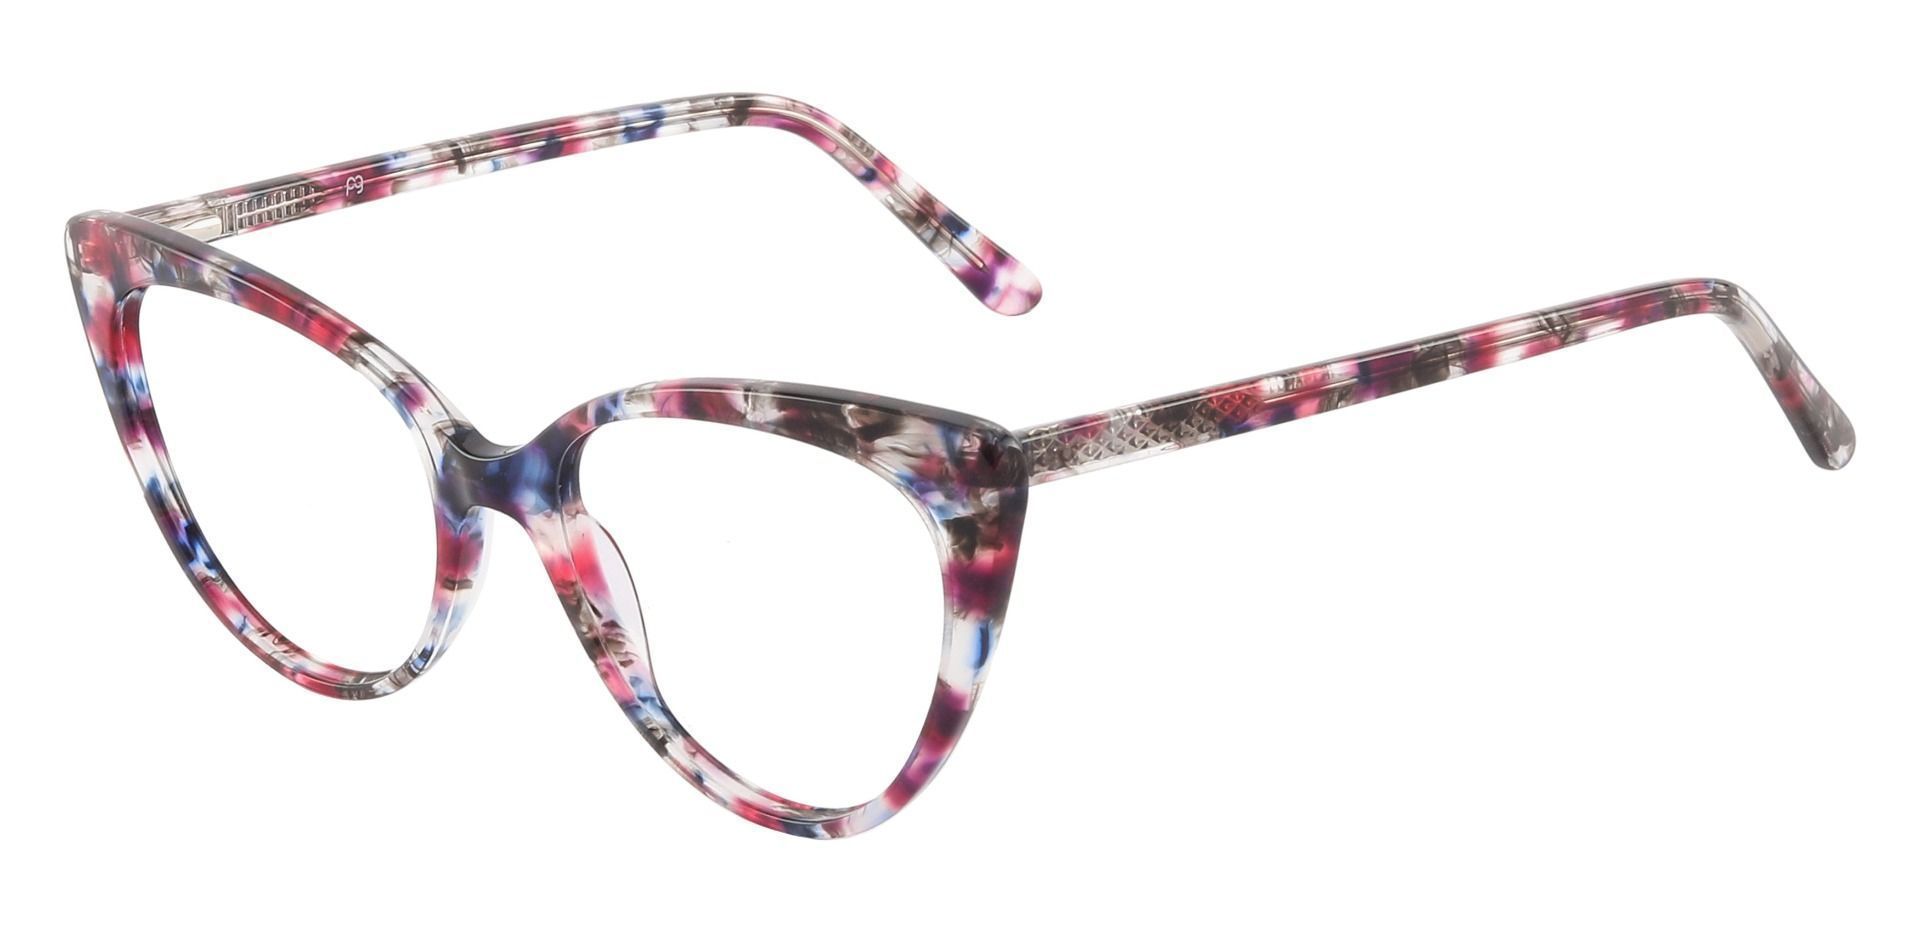 Bristol Cat Eye Eyeglasses Frame - Red